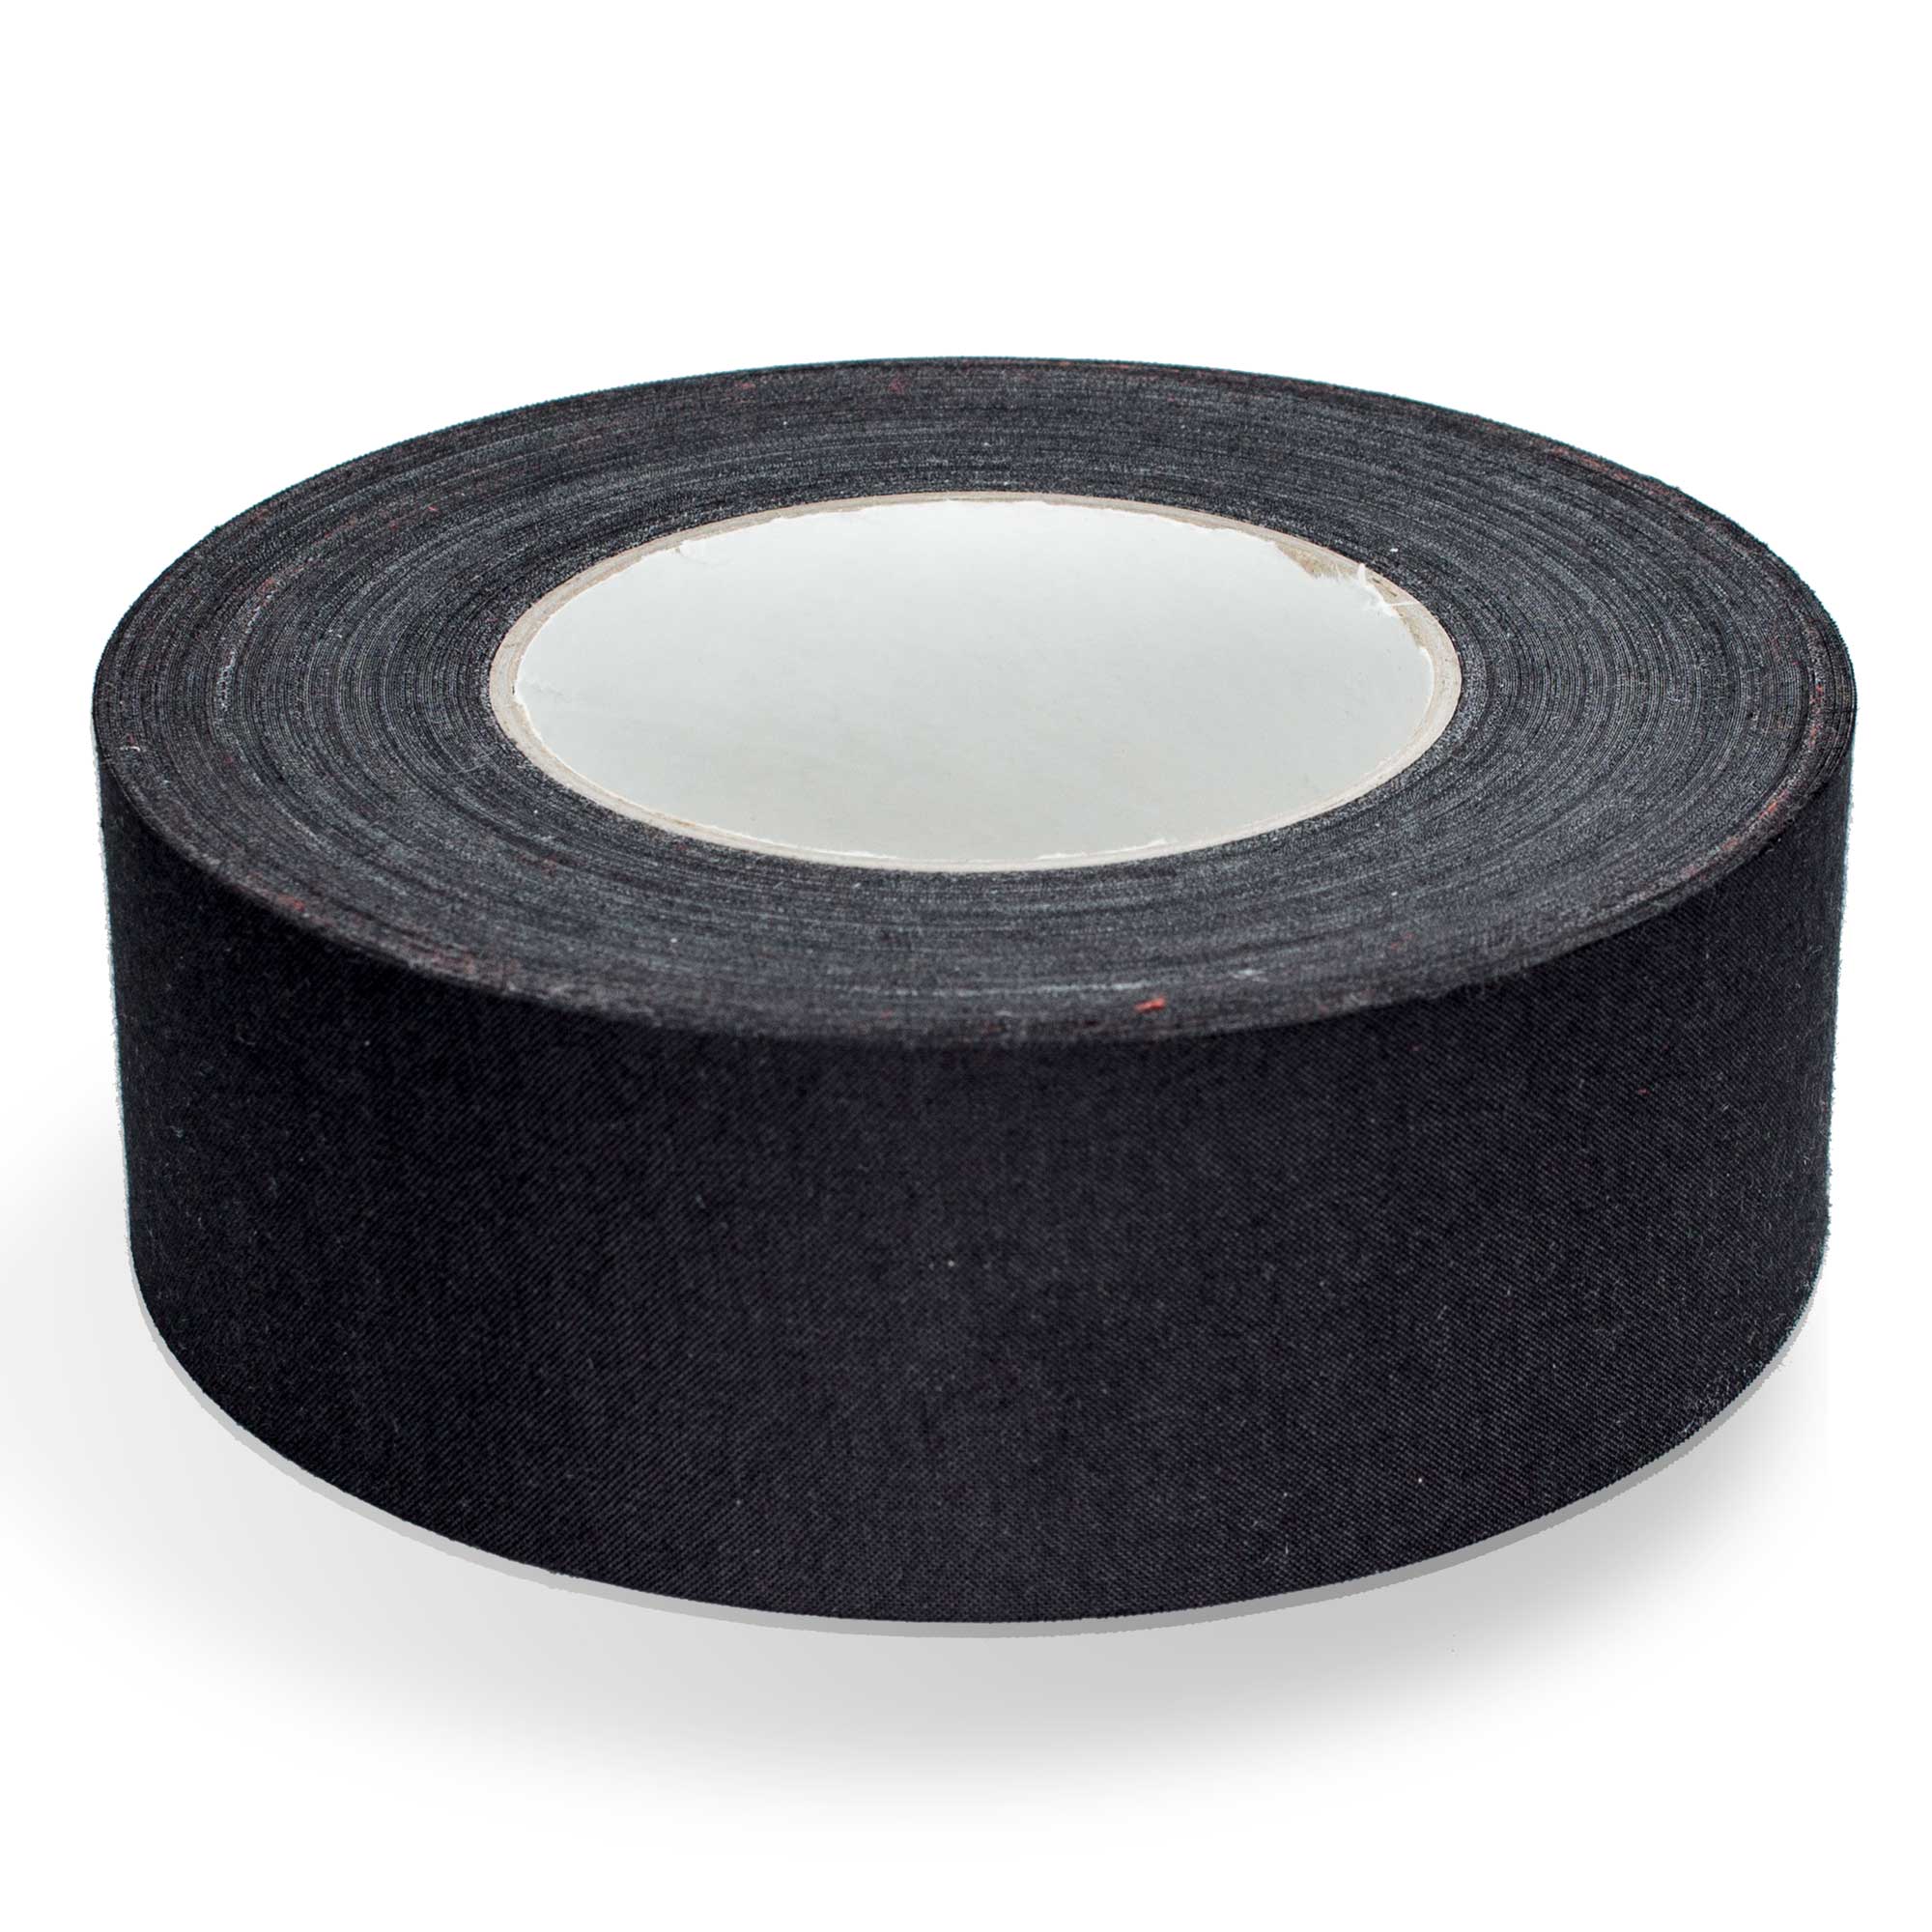 unpackaged black 5cm wide tape